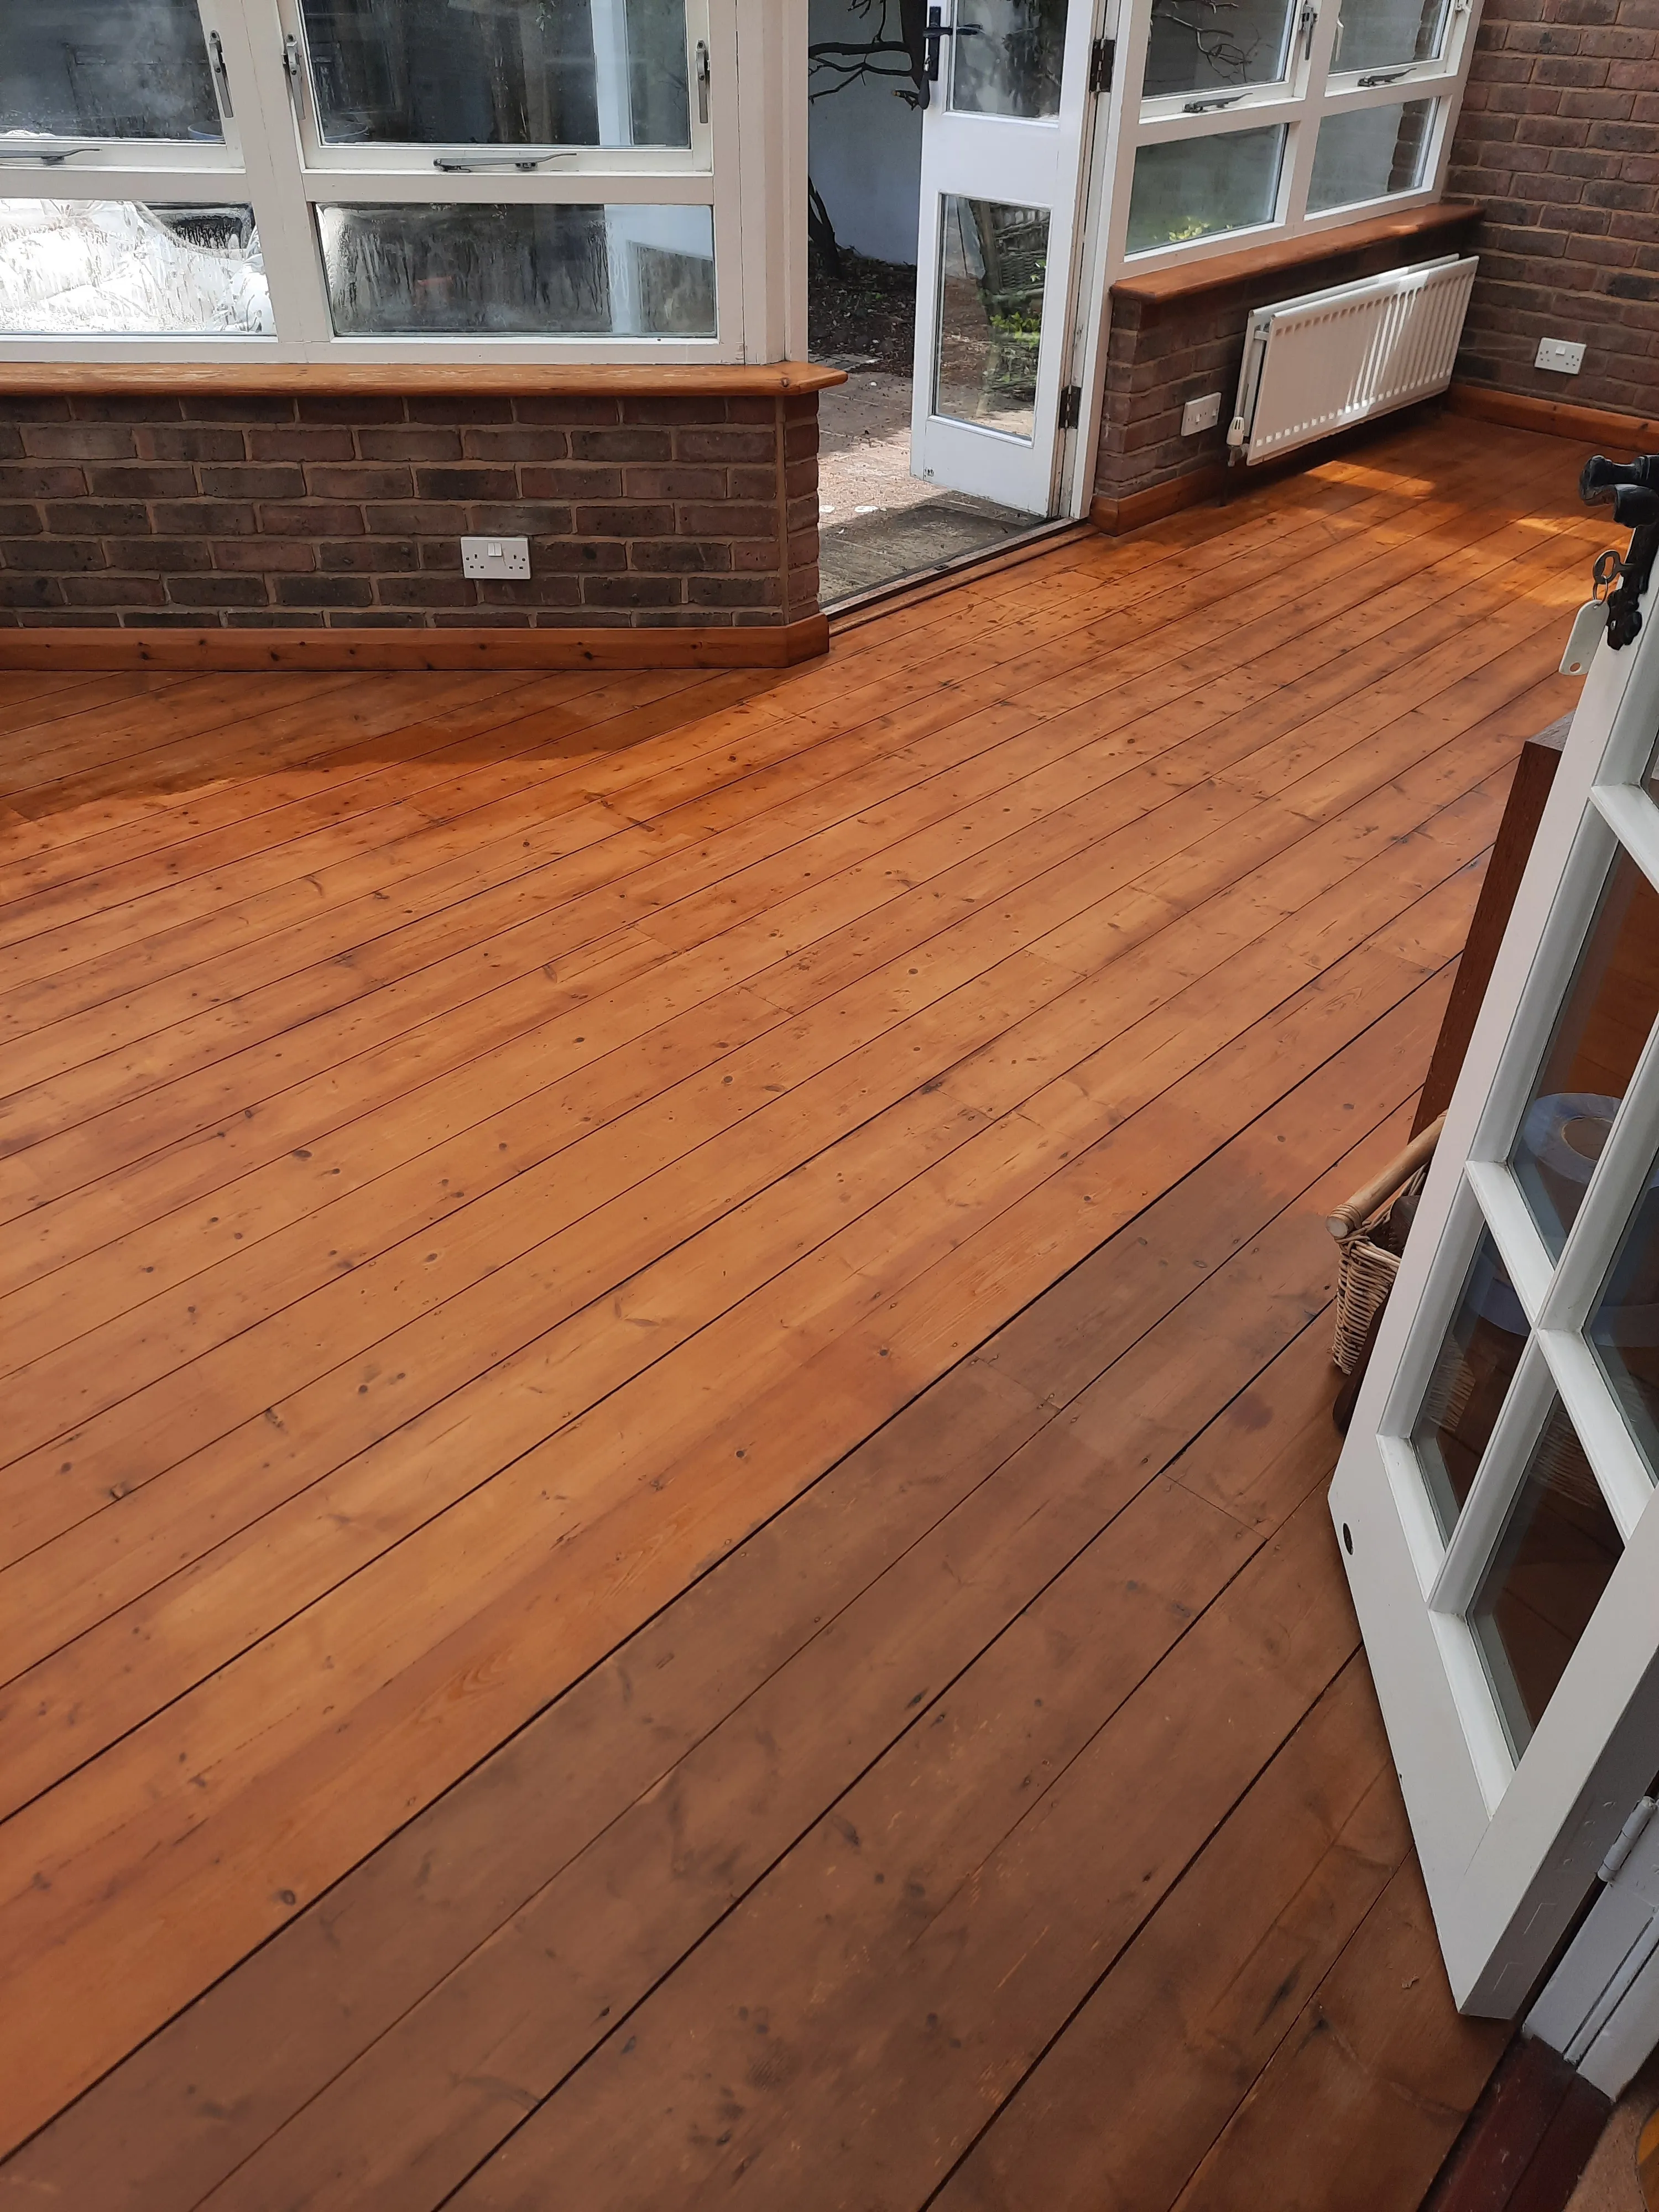 Wooden floor varnished and sealed